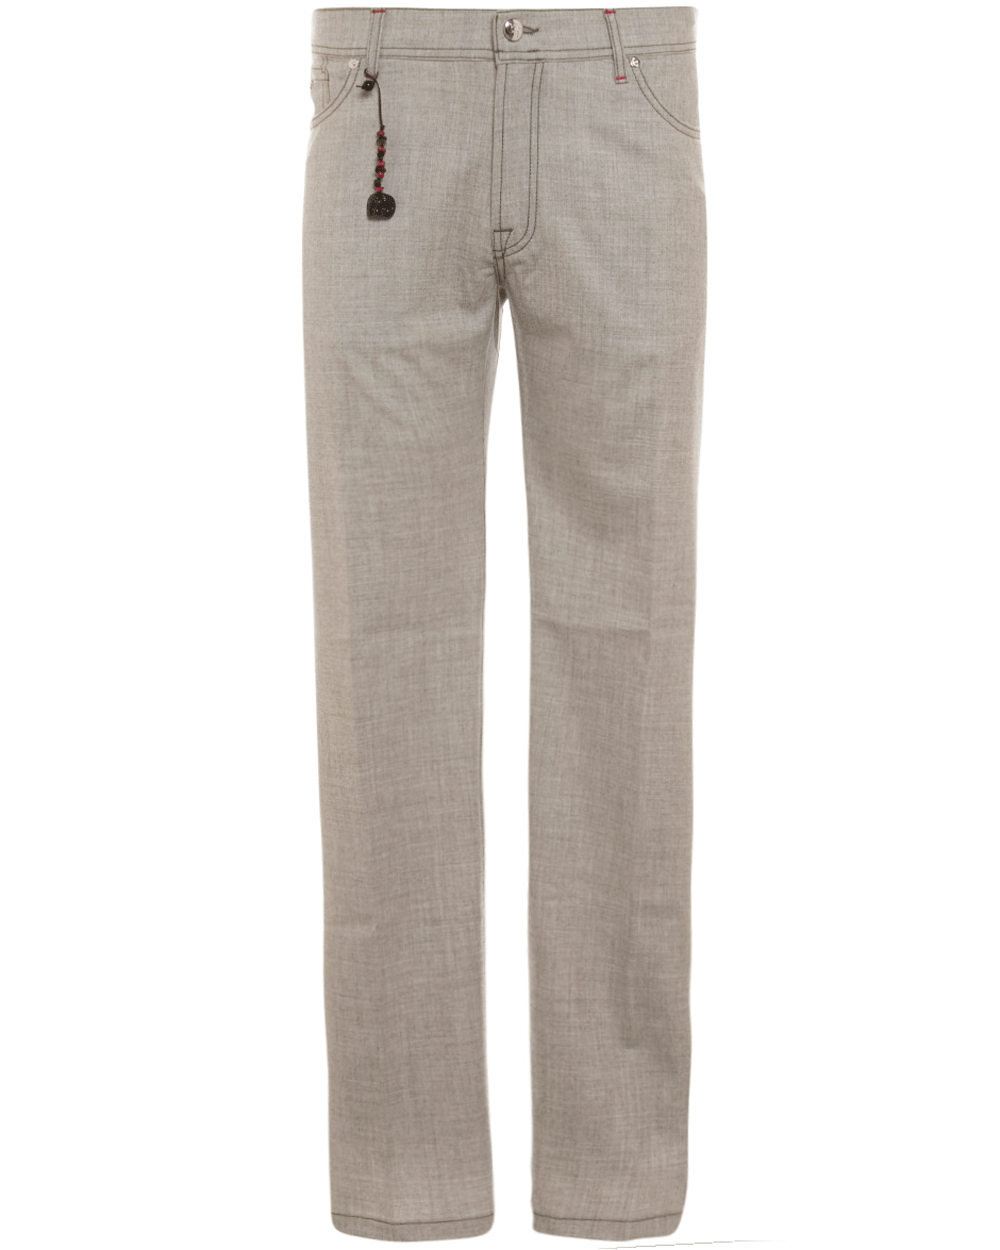 Pearl Grey 5 Pocket Trouser